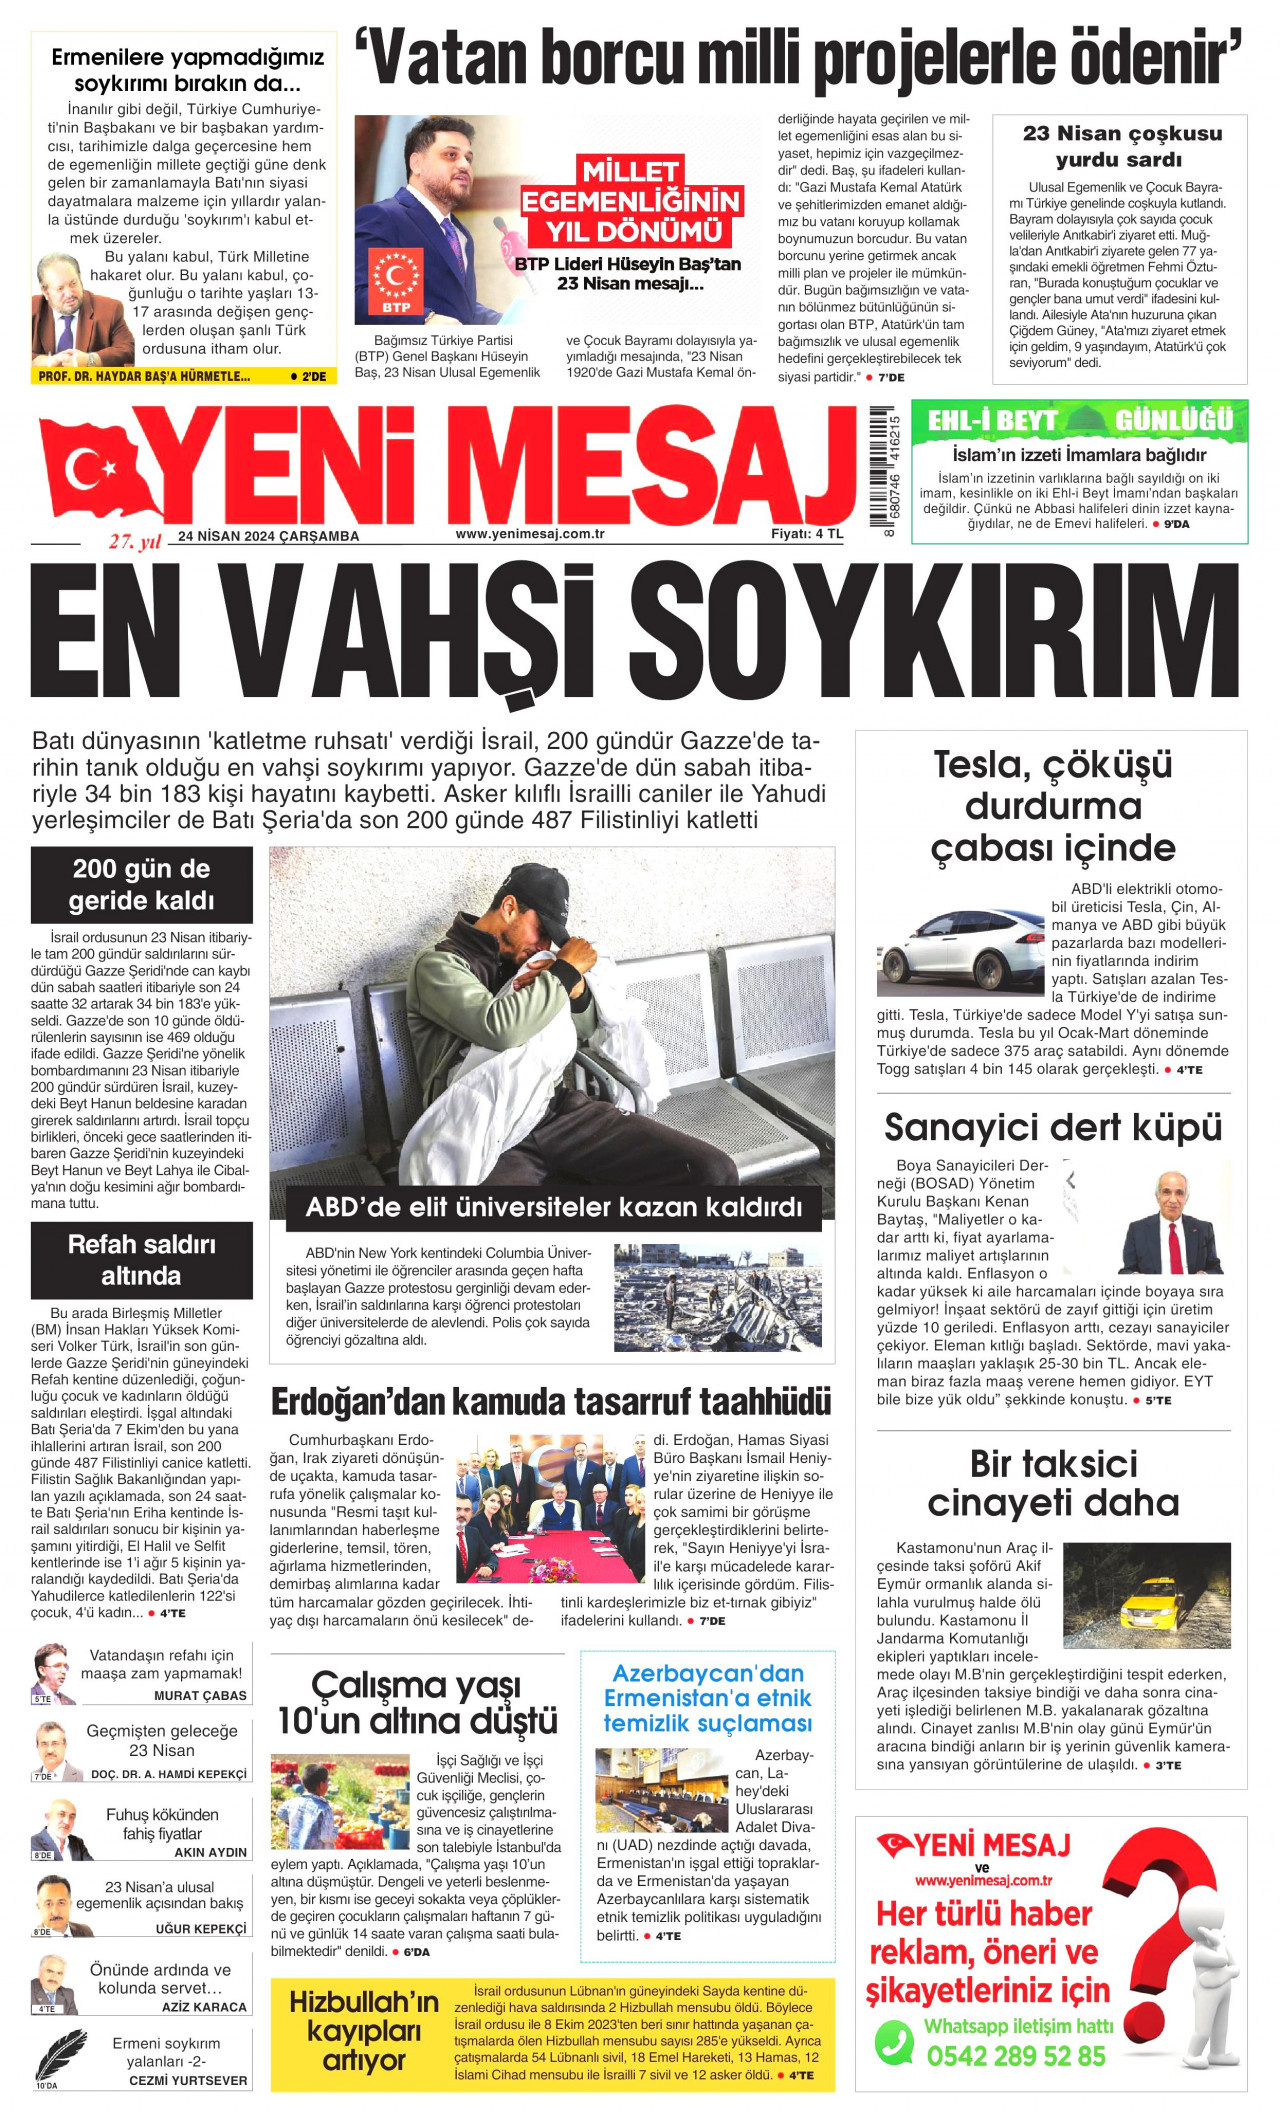 Yeni Mesaj Gazetesi Manşeti